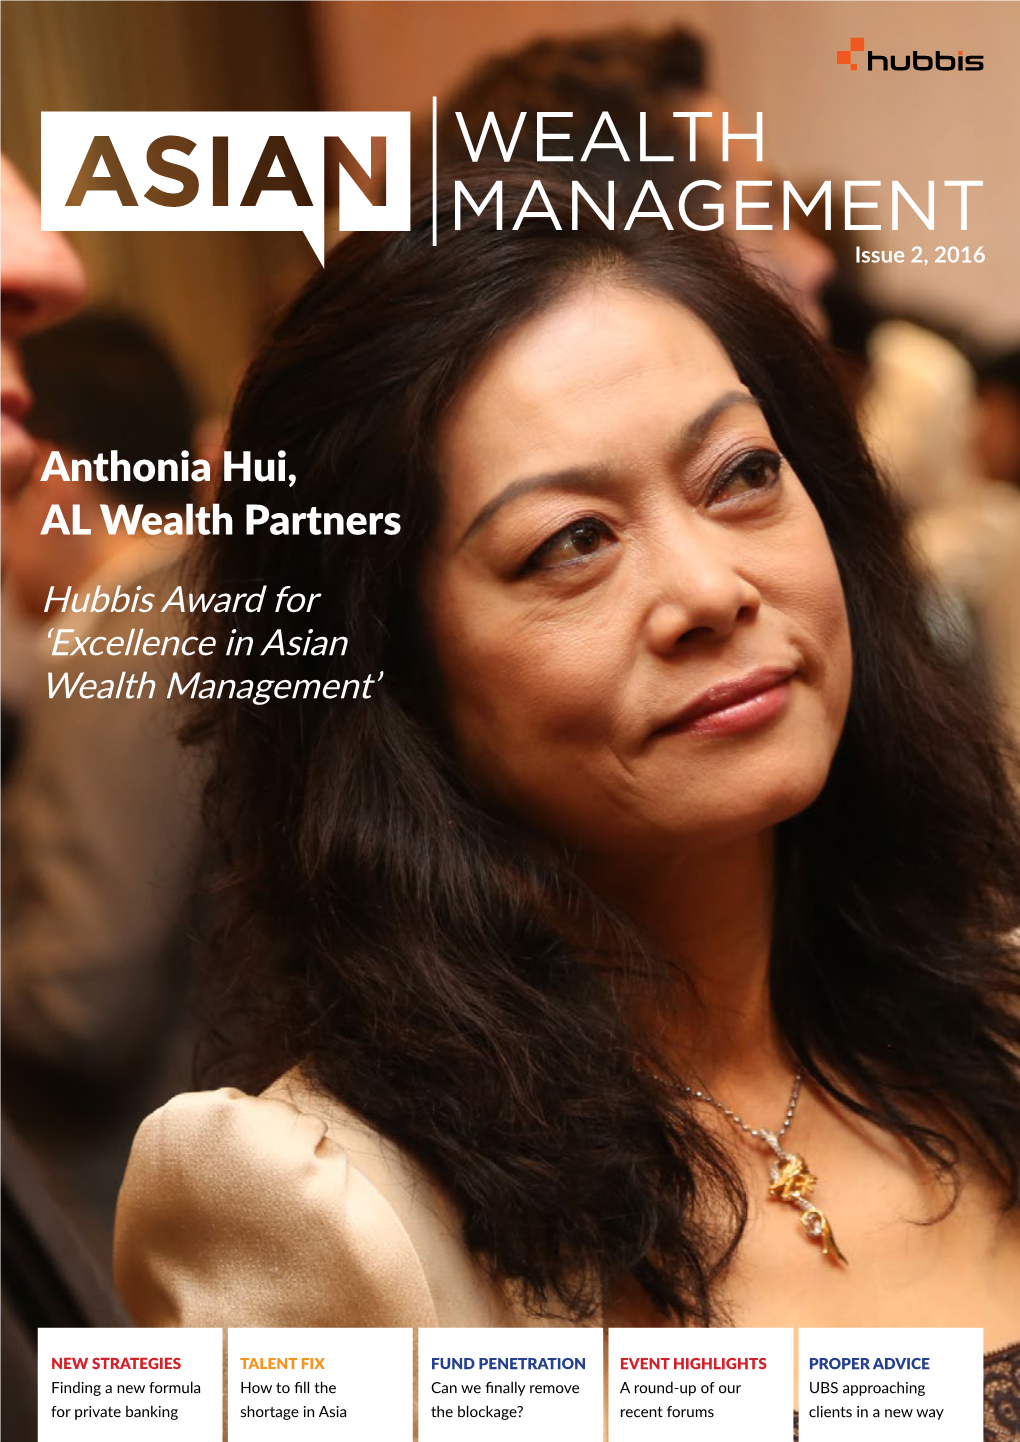 Anthonia Hui, AL Wealth Partners